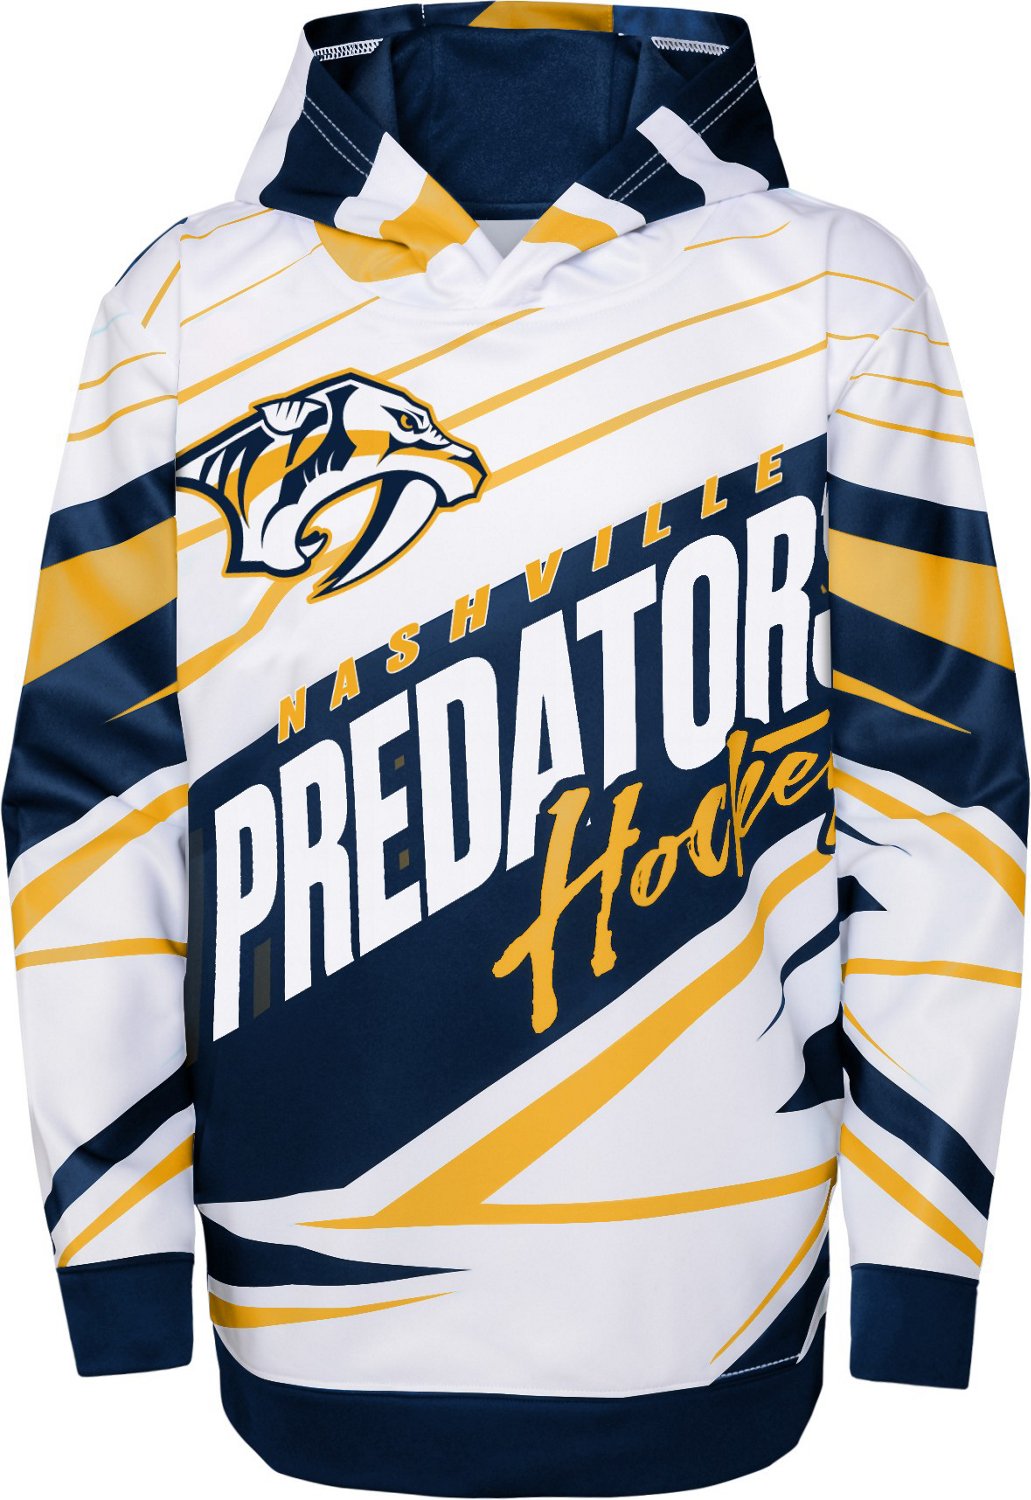 Nashville Predators Team Issued Hoodie #56